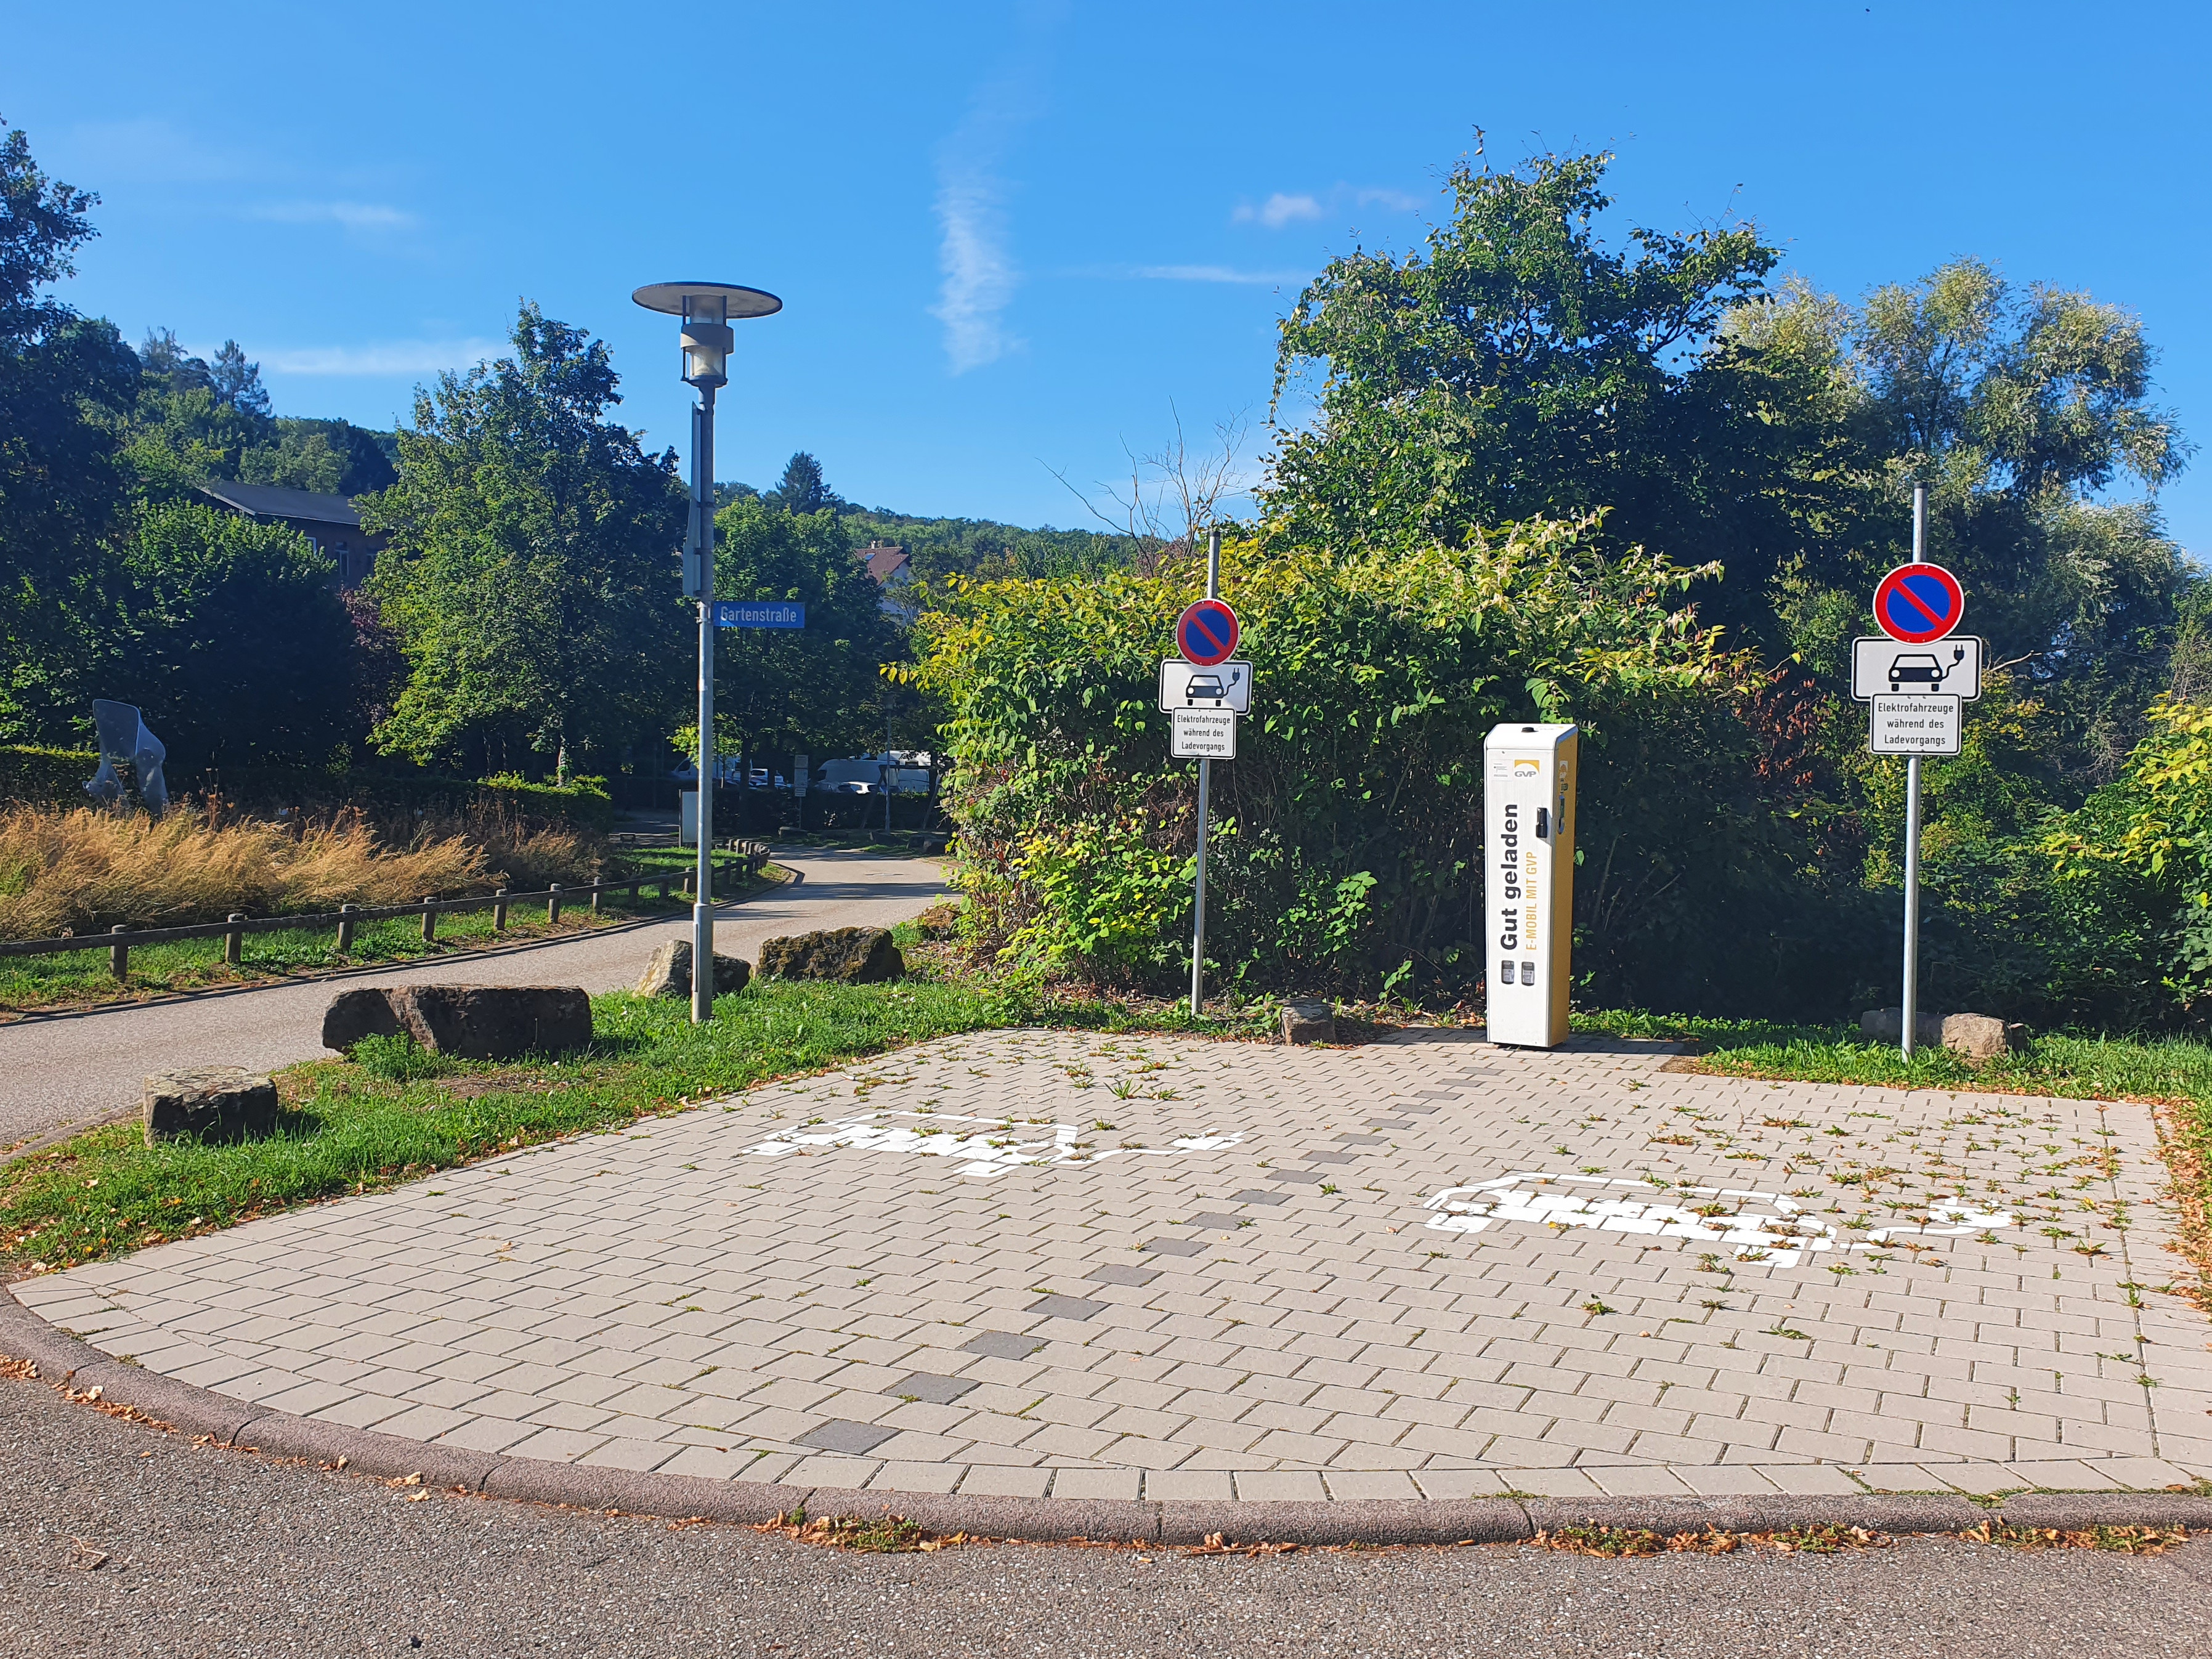 Ladesäule der GVP für E-Autos am Kloster Maulbronn/Gartenstraße, 2 Parkplätze